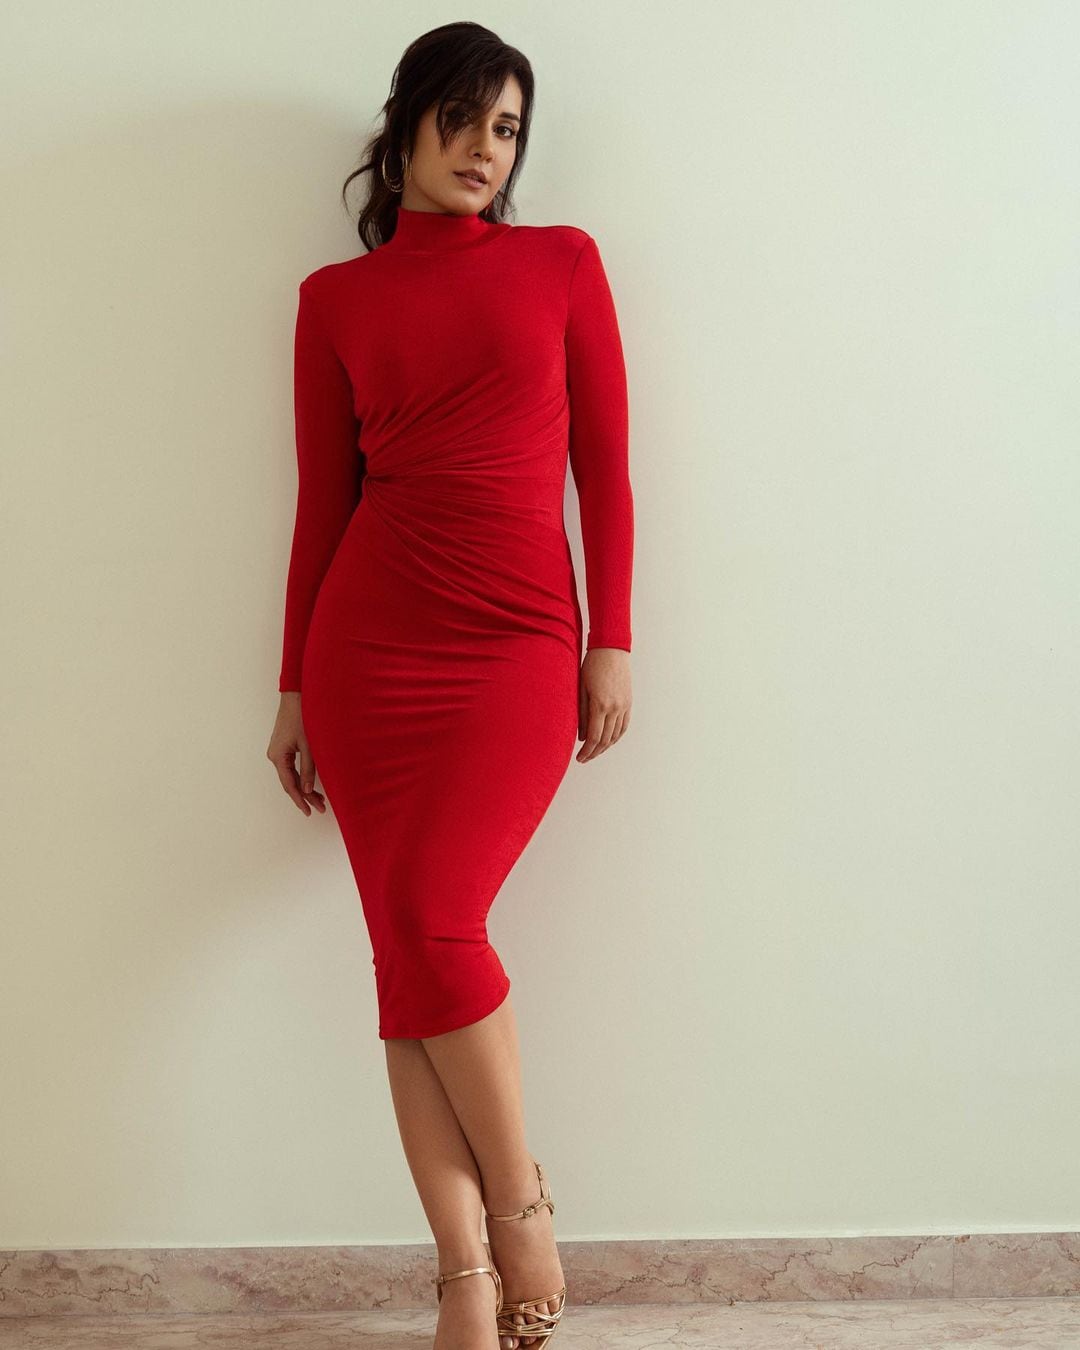 Raashii Khanna flaunts her toned body in the turtleneck dress